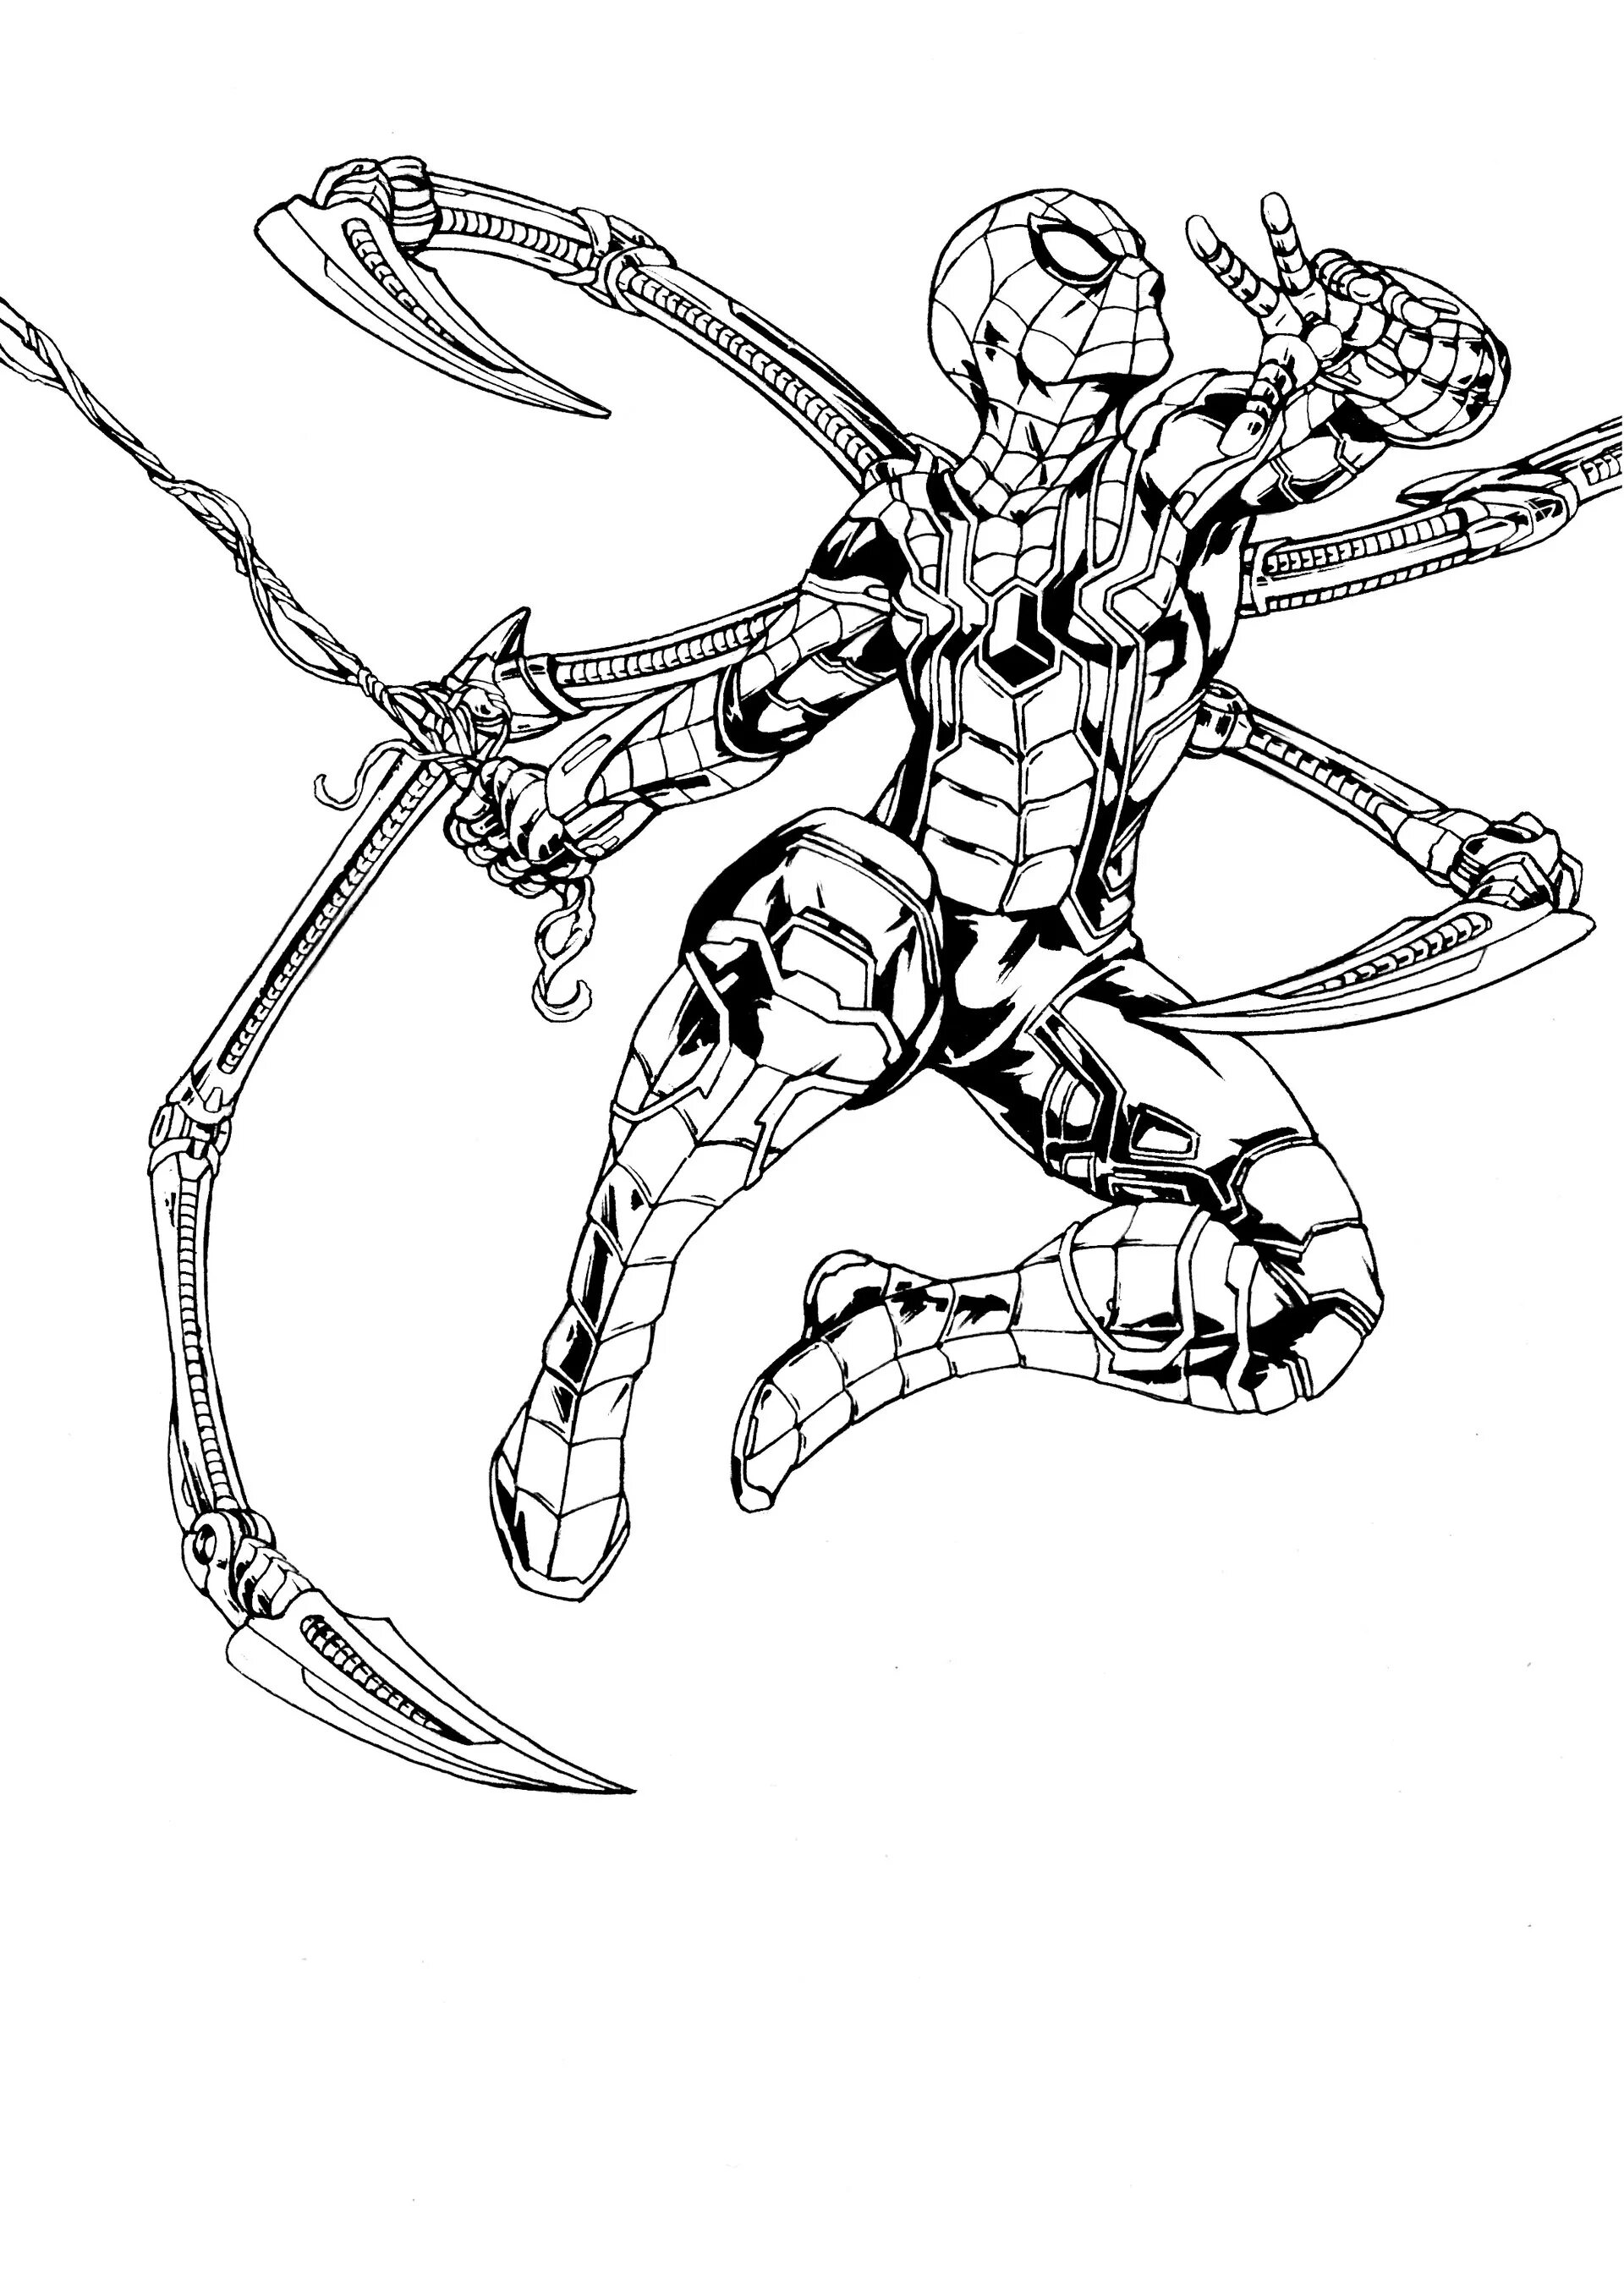 Железный паук раскраска. Разукрашка Железный человек паук. Раскраска человек паук 2099. Человек паук с клешнями раскраска. Раскраски Марвел Железный человек паук.